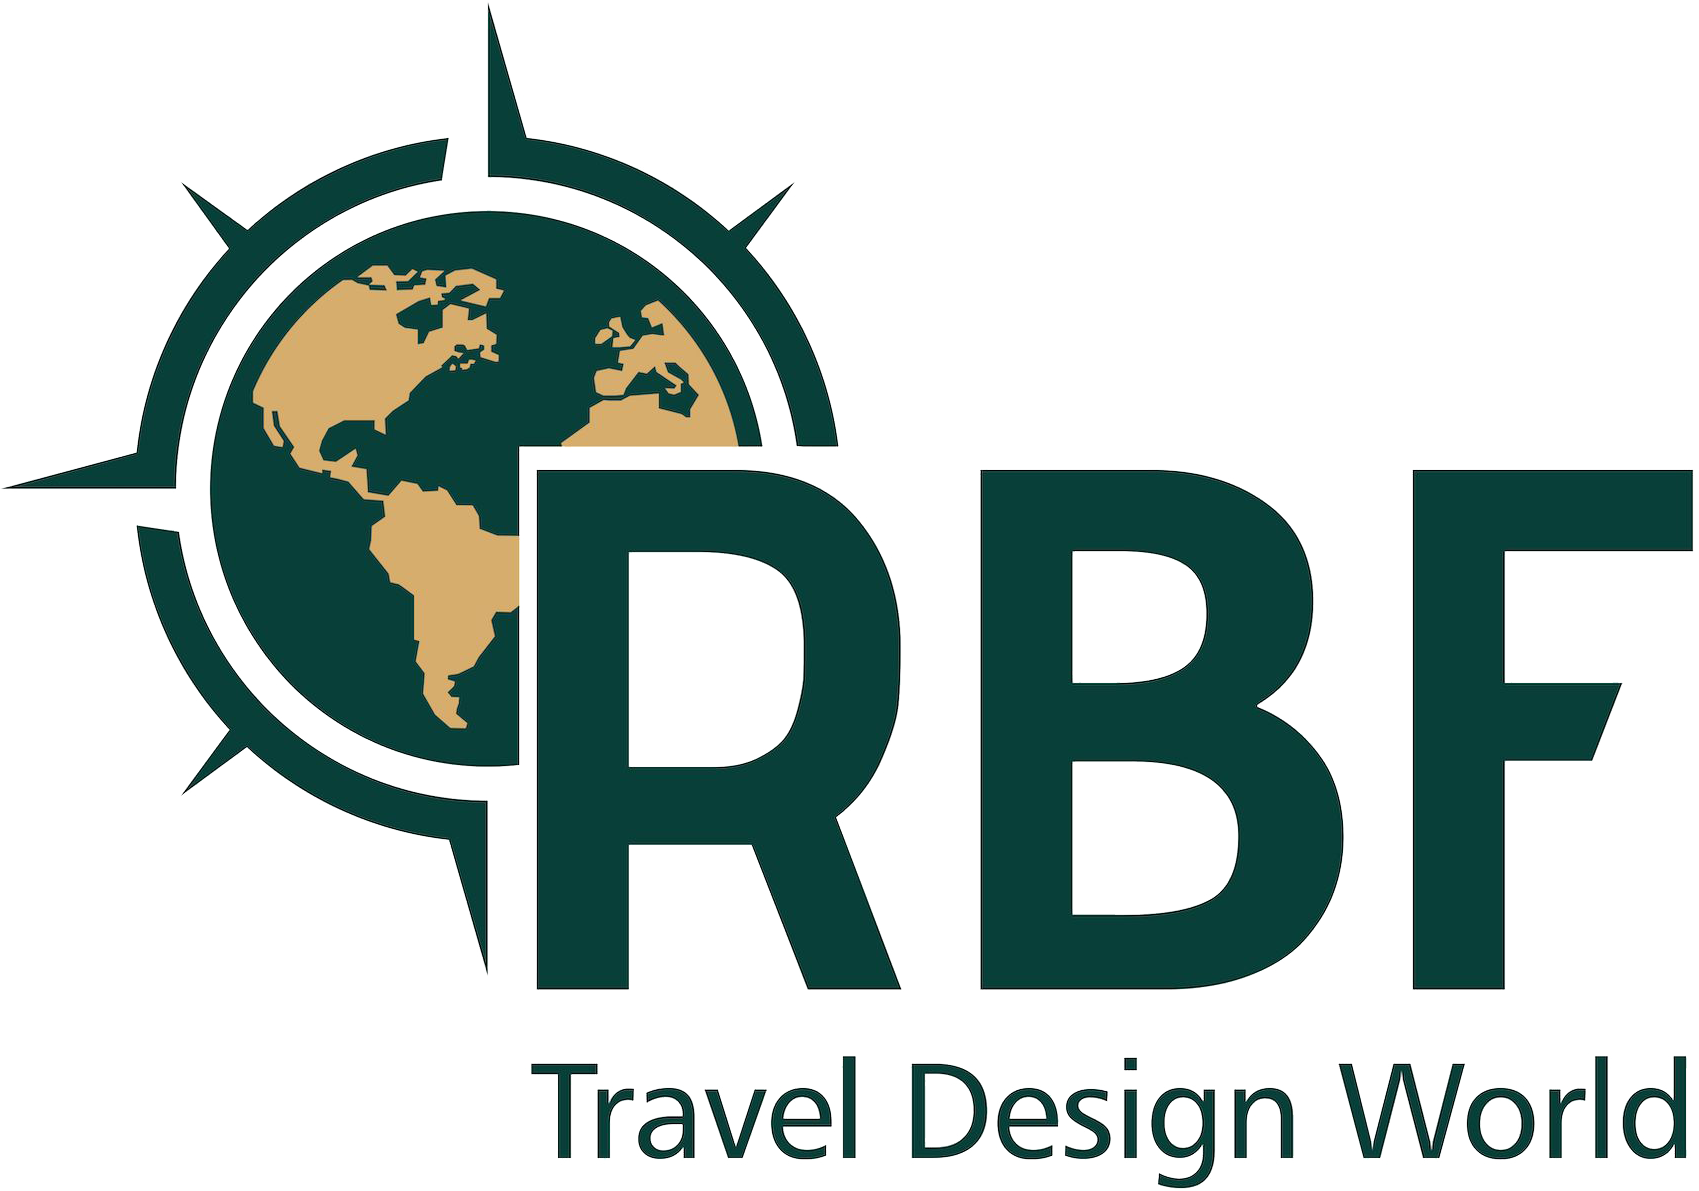 RBF Turismo Travel Design